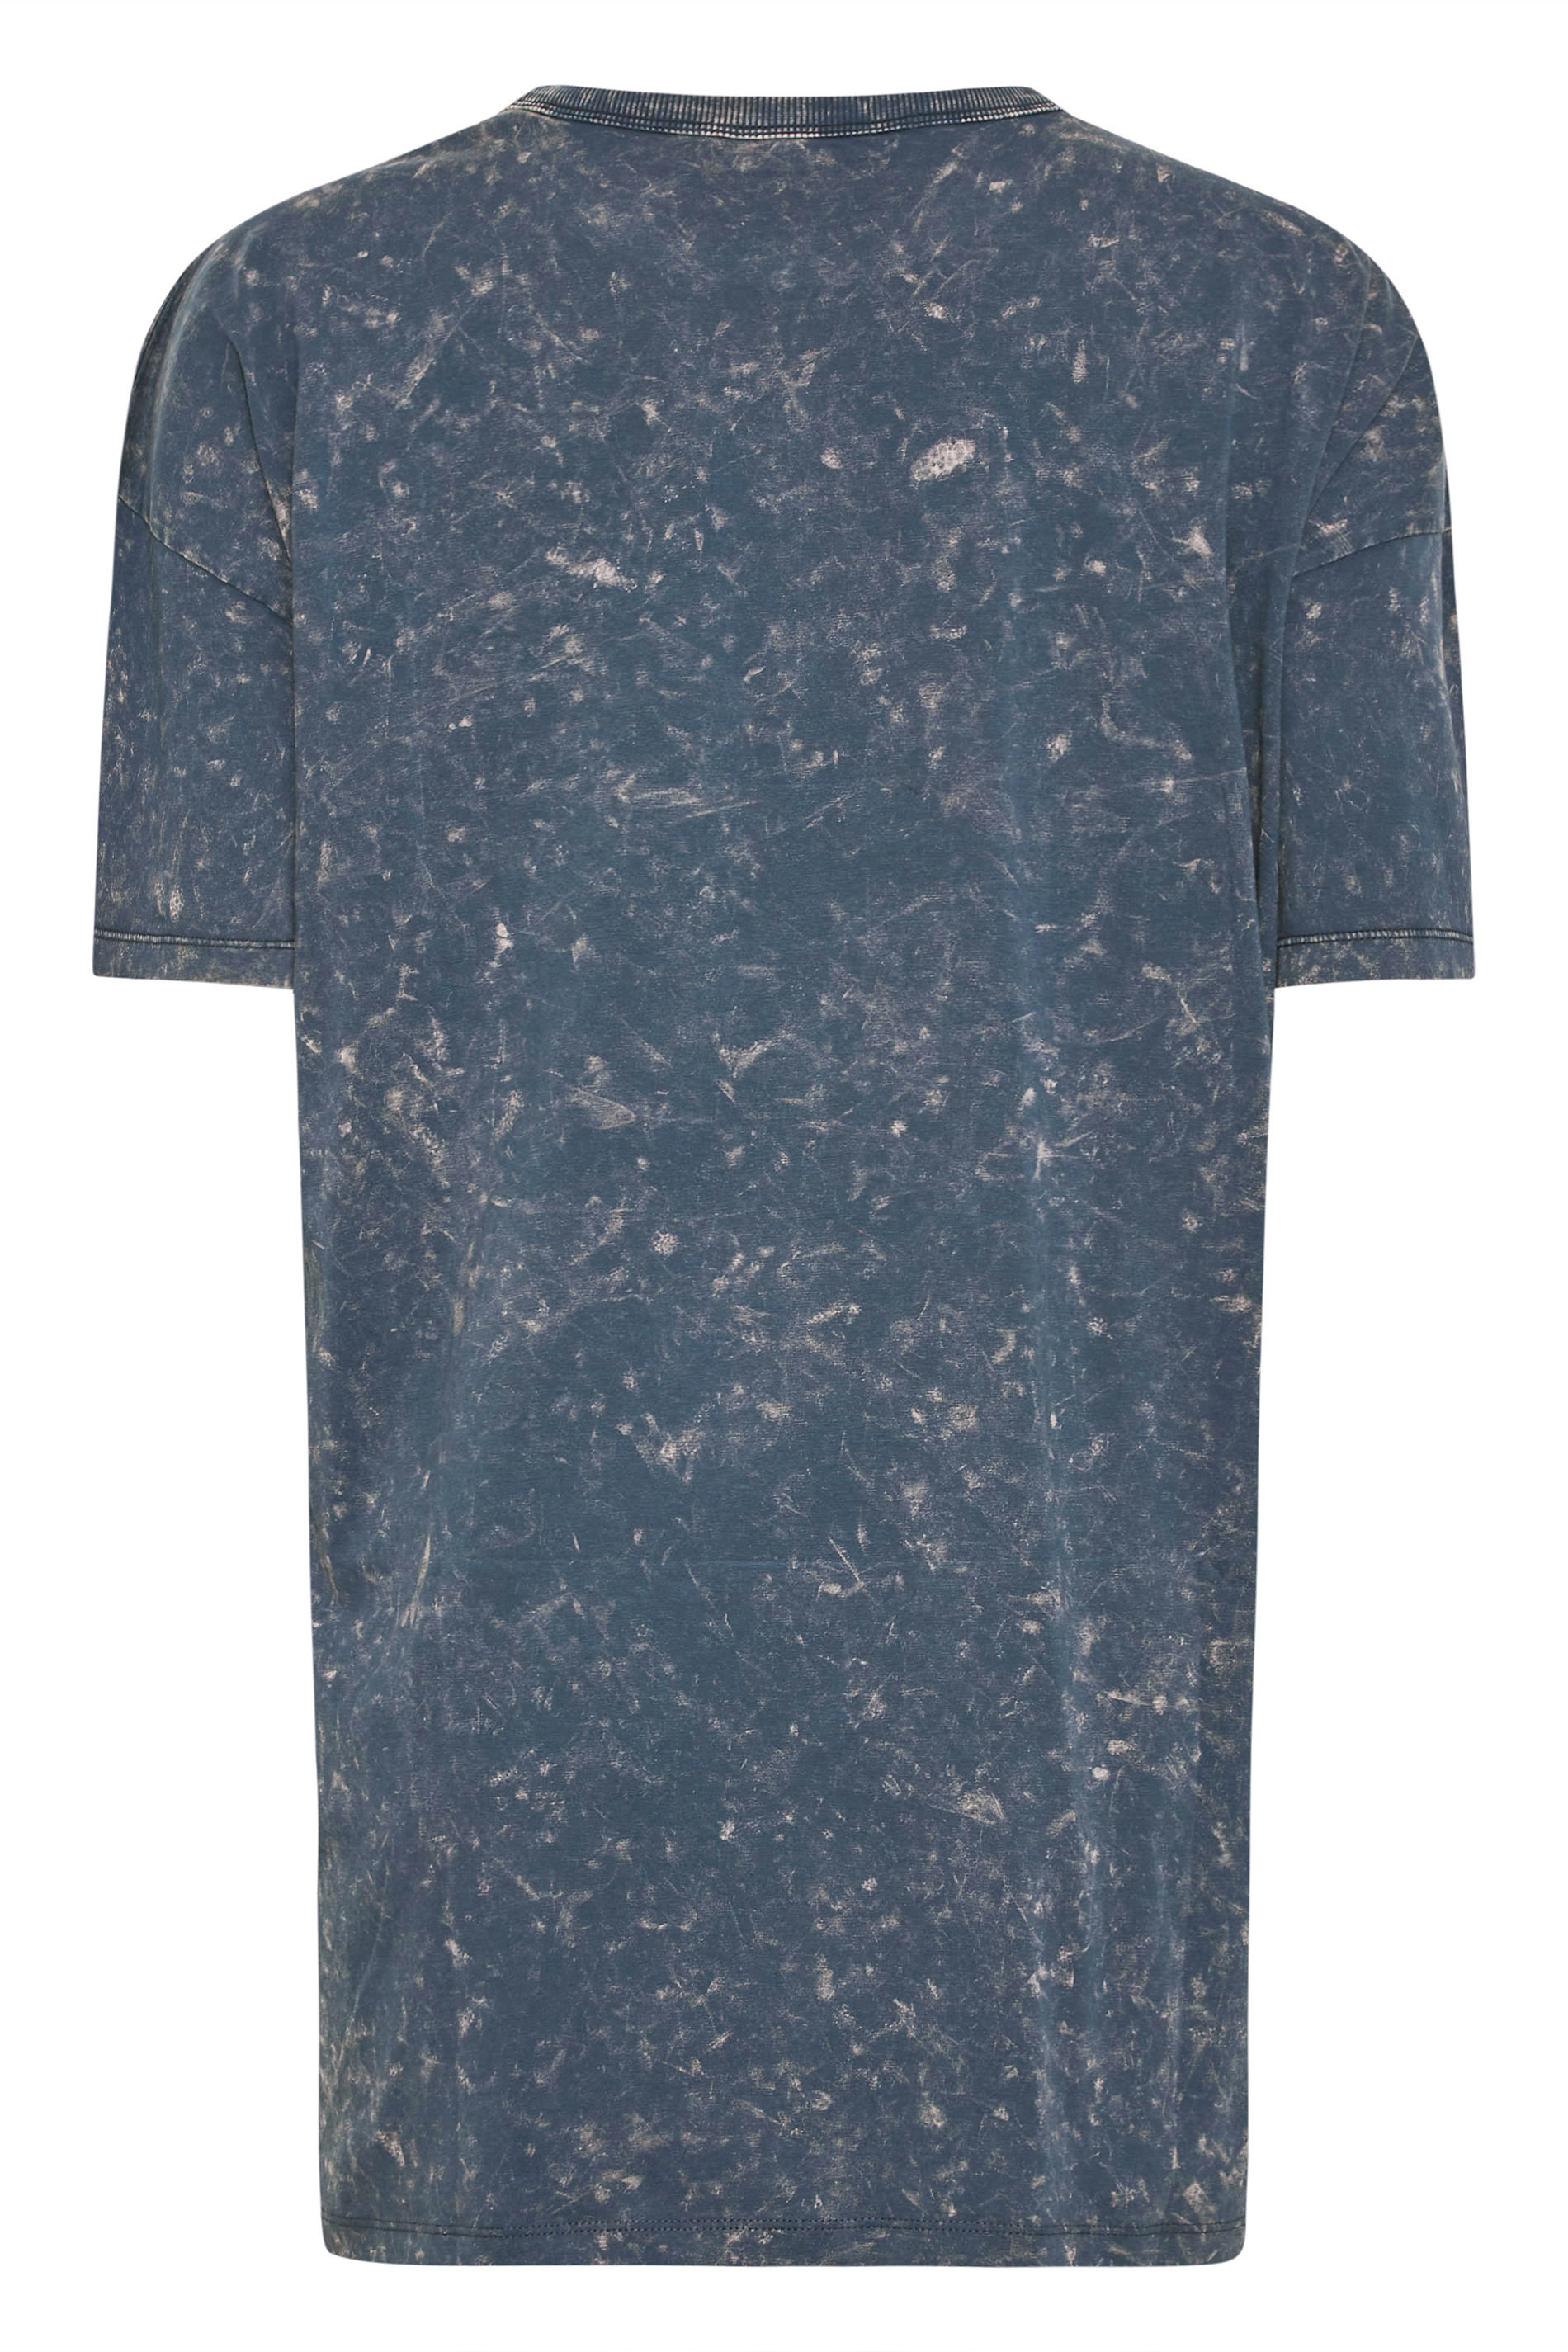 LTS Tall Women's Navy Blue Acid Wash Oversized T-Shirt | Long Tall Sally